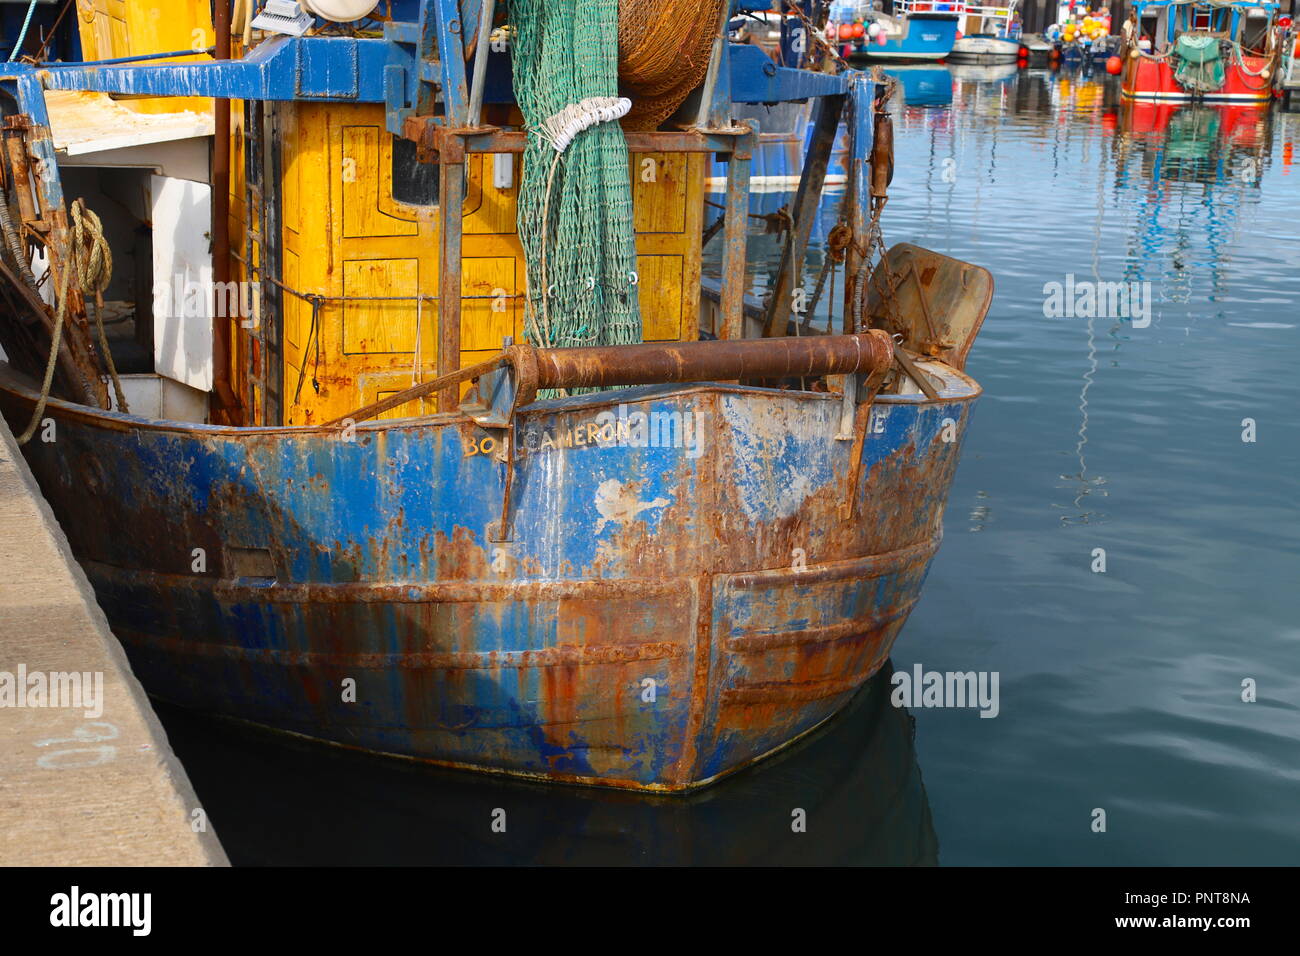 Stern of a trawler in Portavogie Fishing Port, Ards Peninsula, County Down, Northern Ireland, U.K. Stock Photo